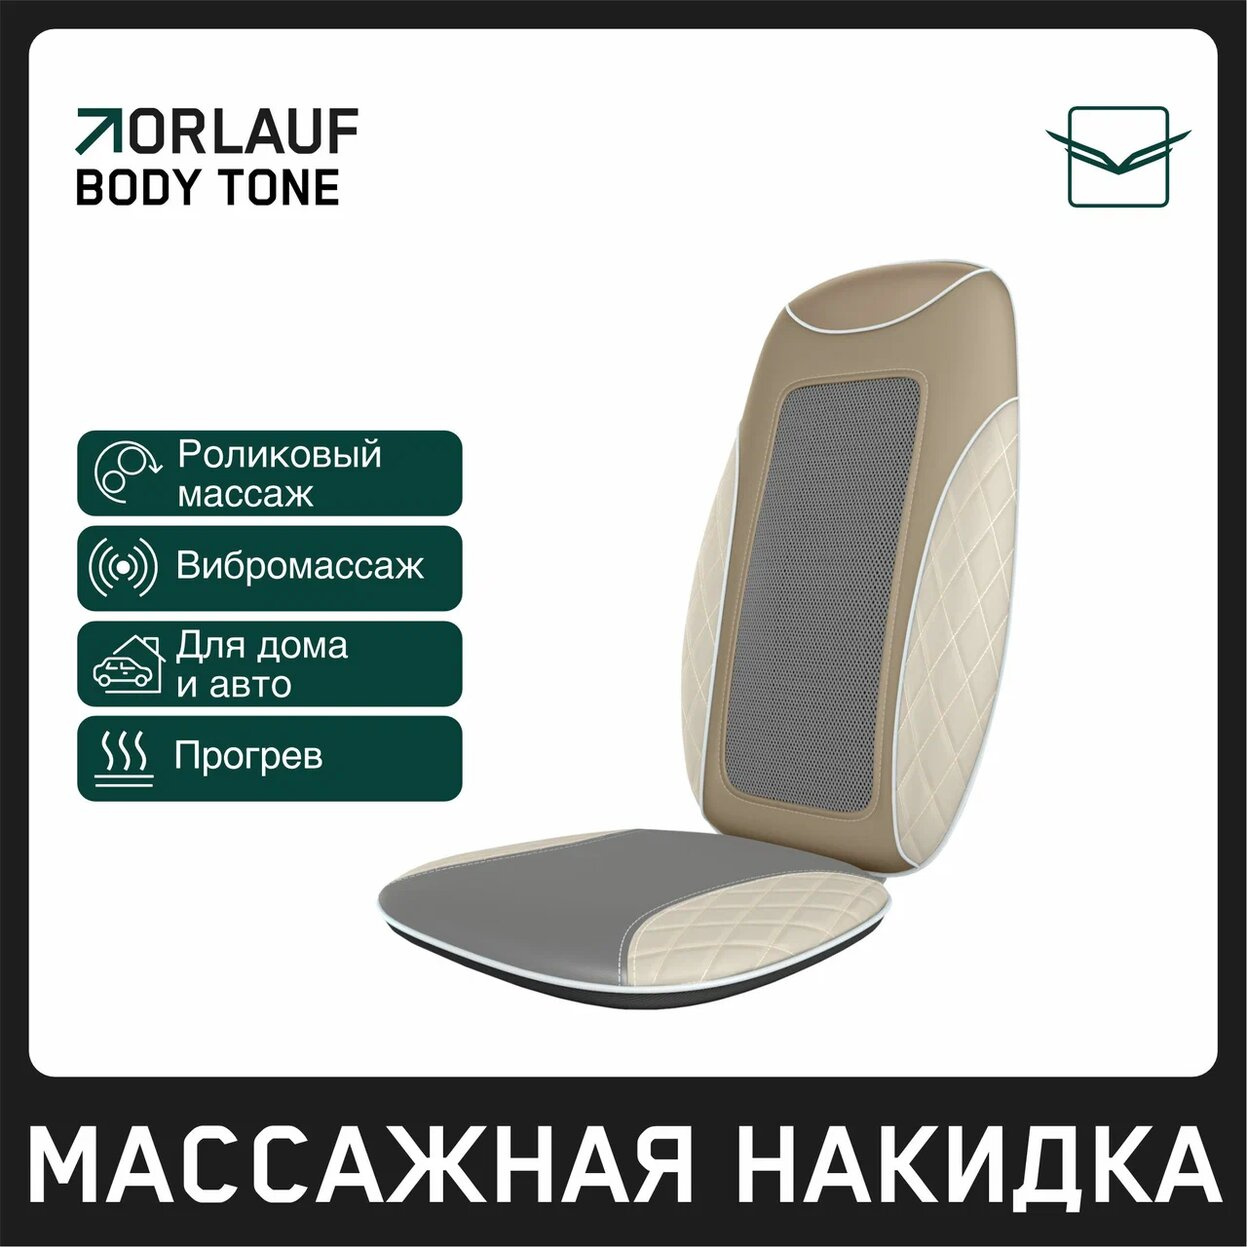 Body Tone в Воронеже по цене 15400 ₽ в категории каталог Orlauf